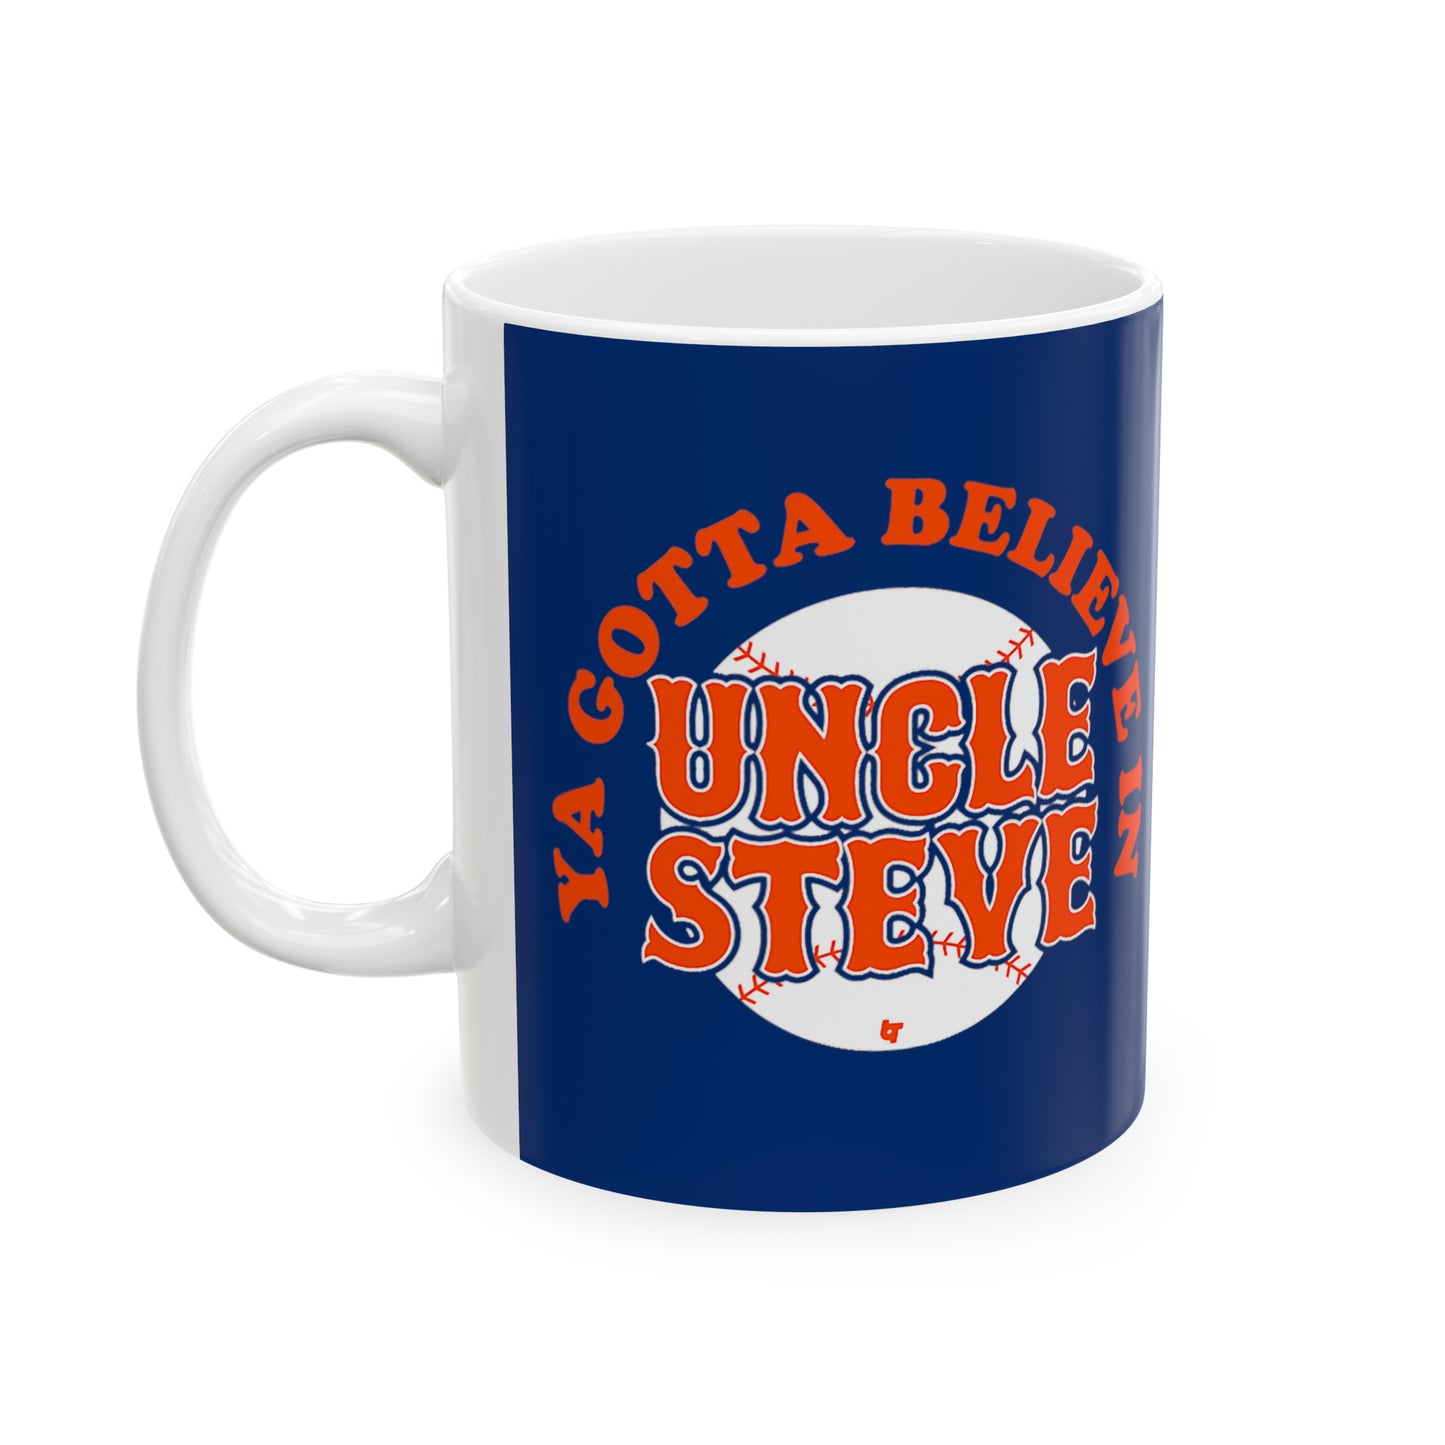 Steve Cohen Mets Owner Tribute 11oz Ceramic Mug - Perfect for New York Mets Fans